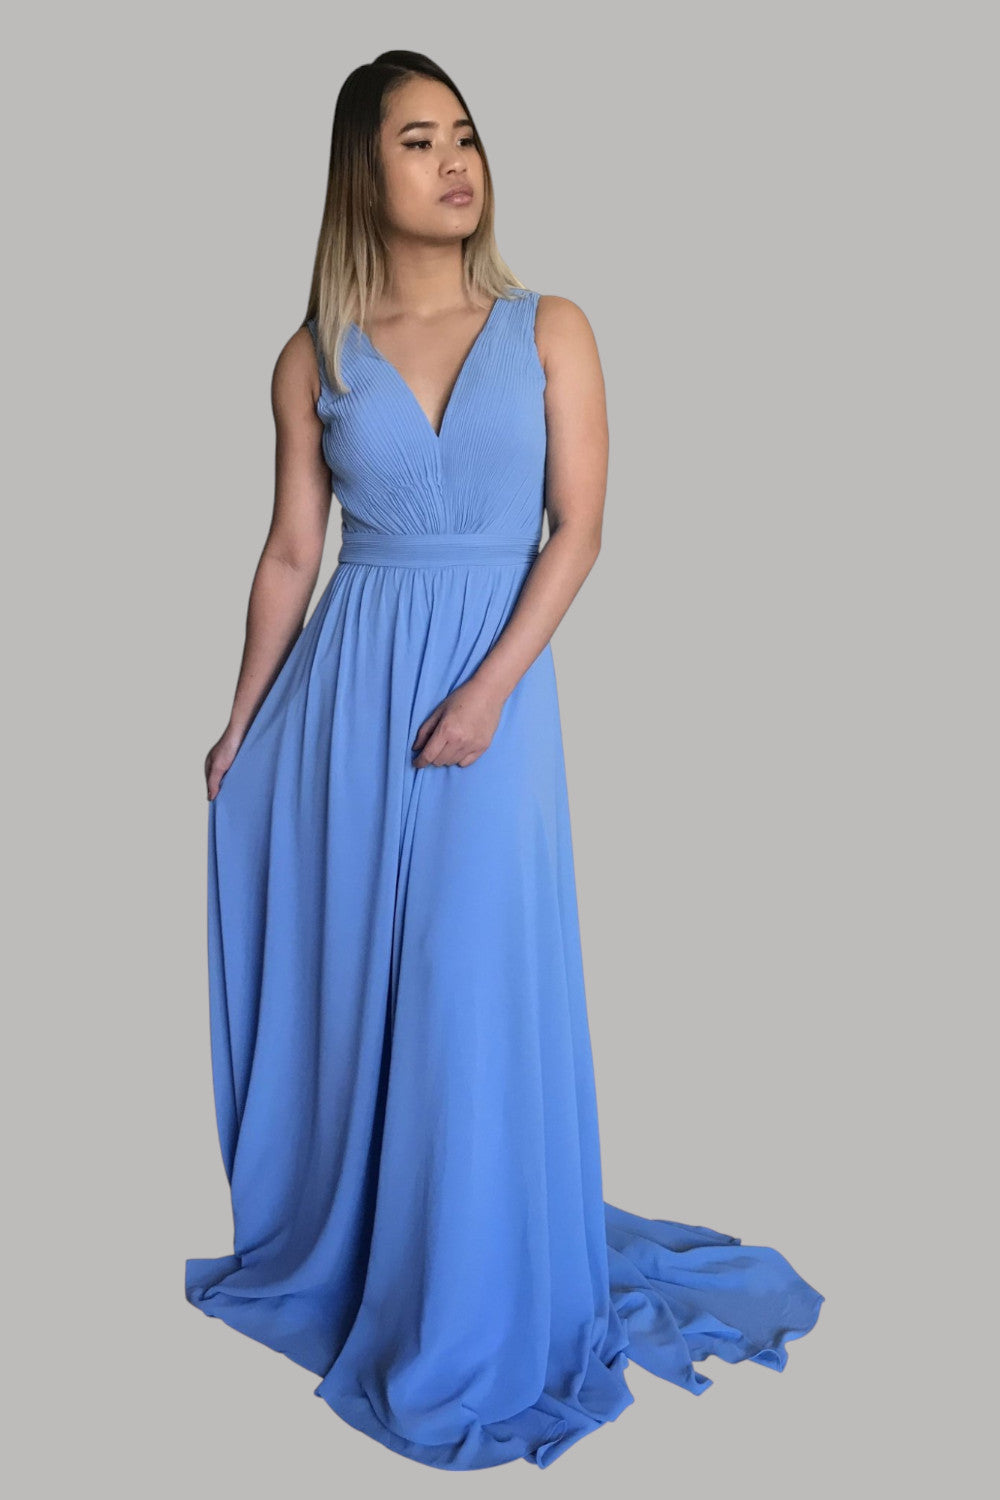 Custom made sky blue bridesmaid dresses Perth Australia Envious Bridal & Formal